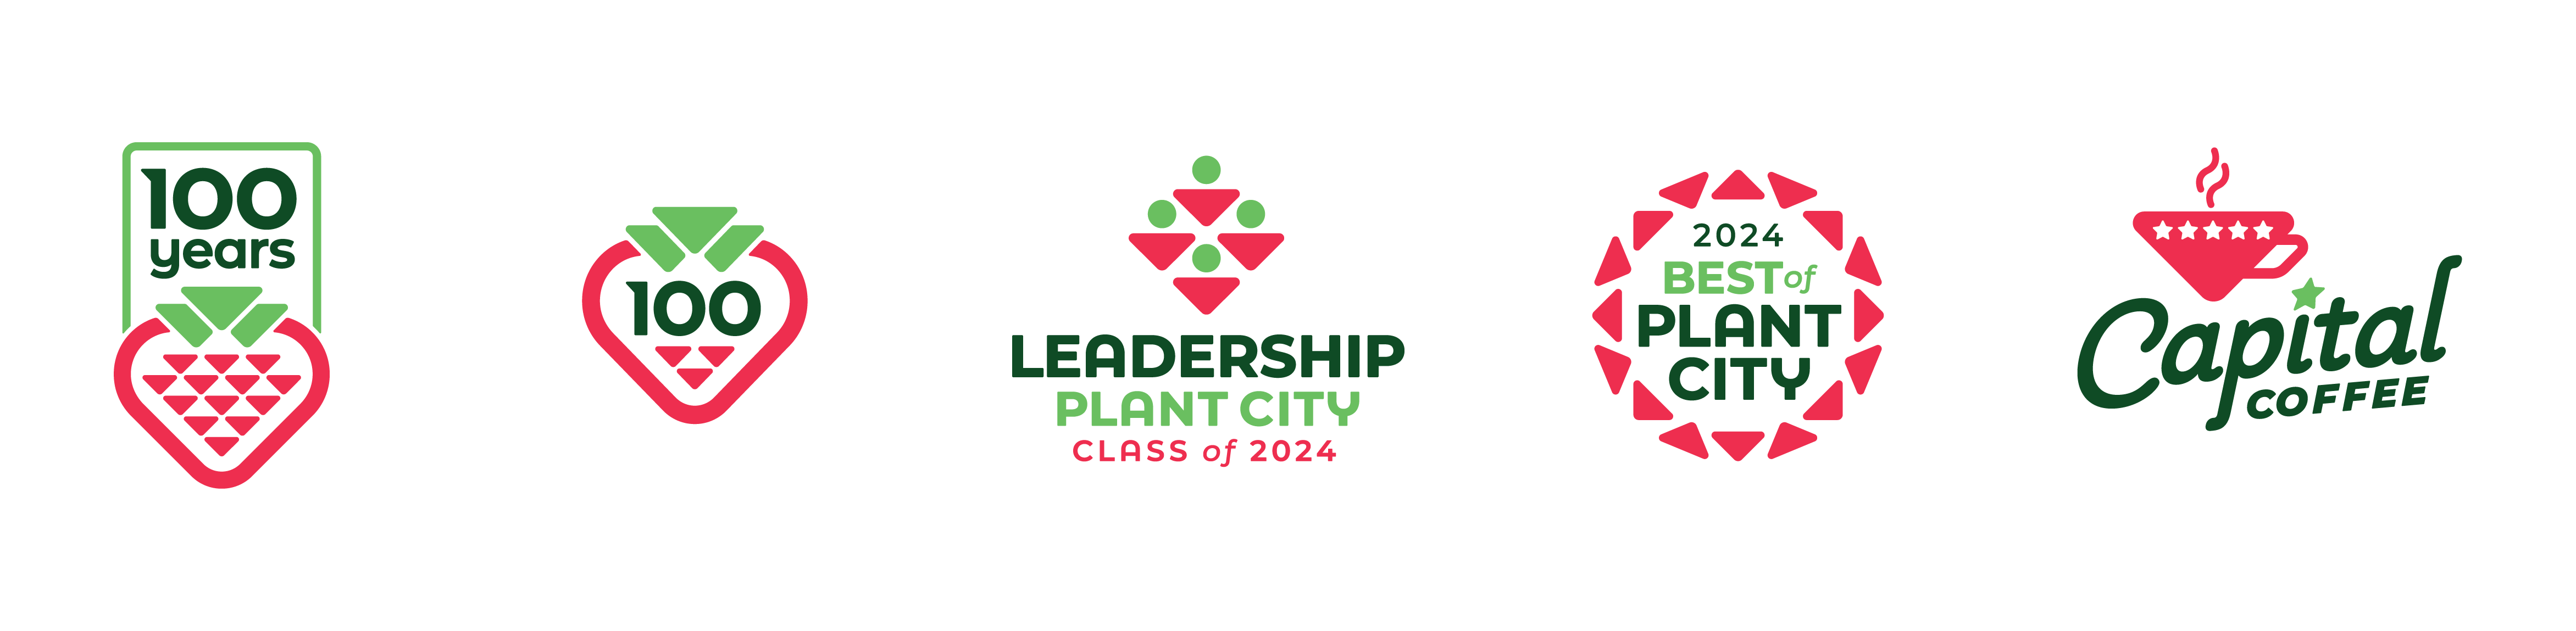 Plant City Family of logos